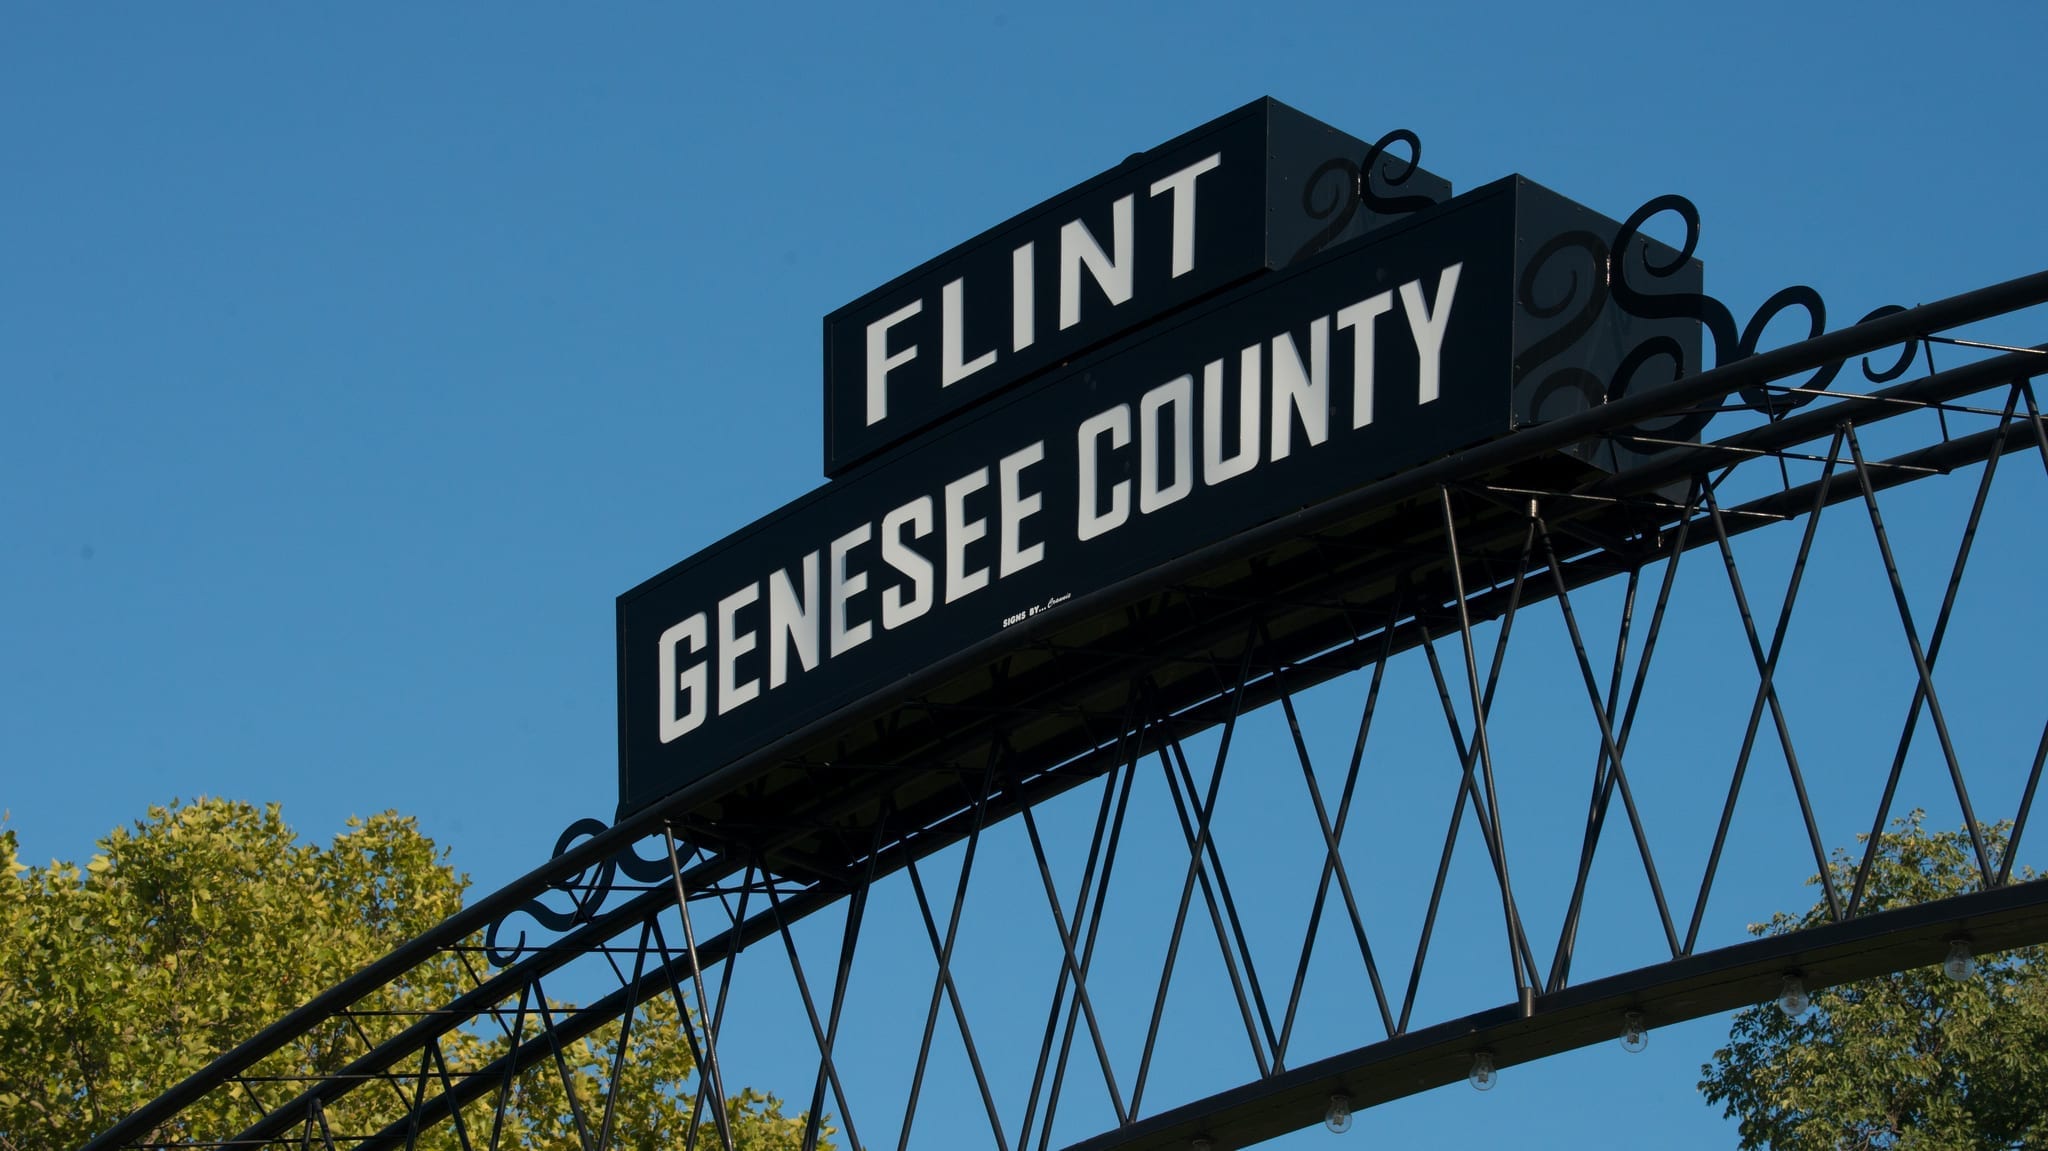 Downtown Flint, MI; image courtesty of USDA.gov via Flickr, public domain.